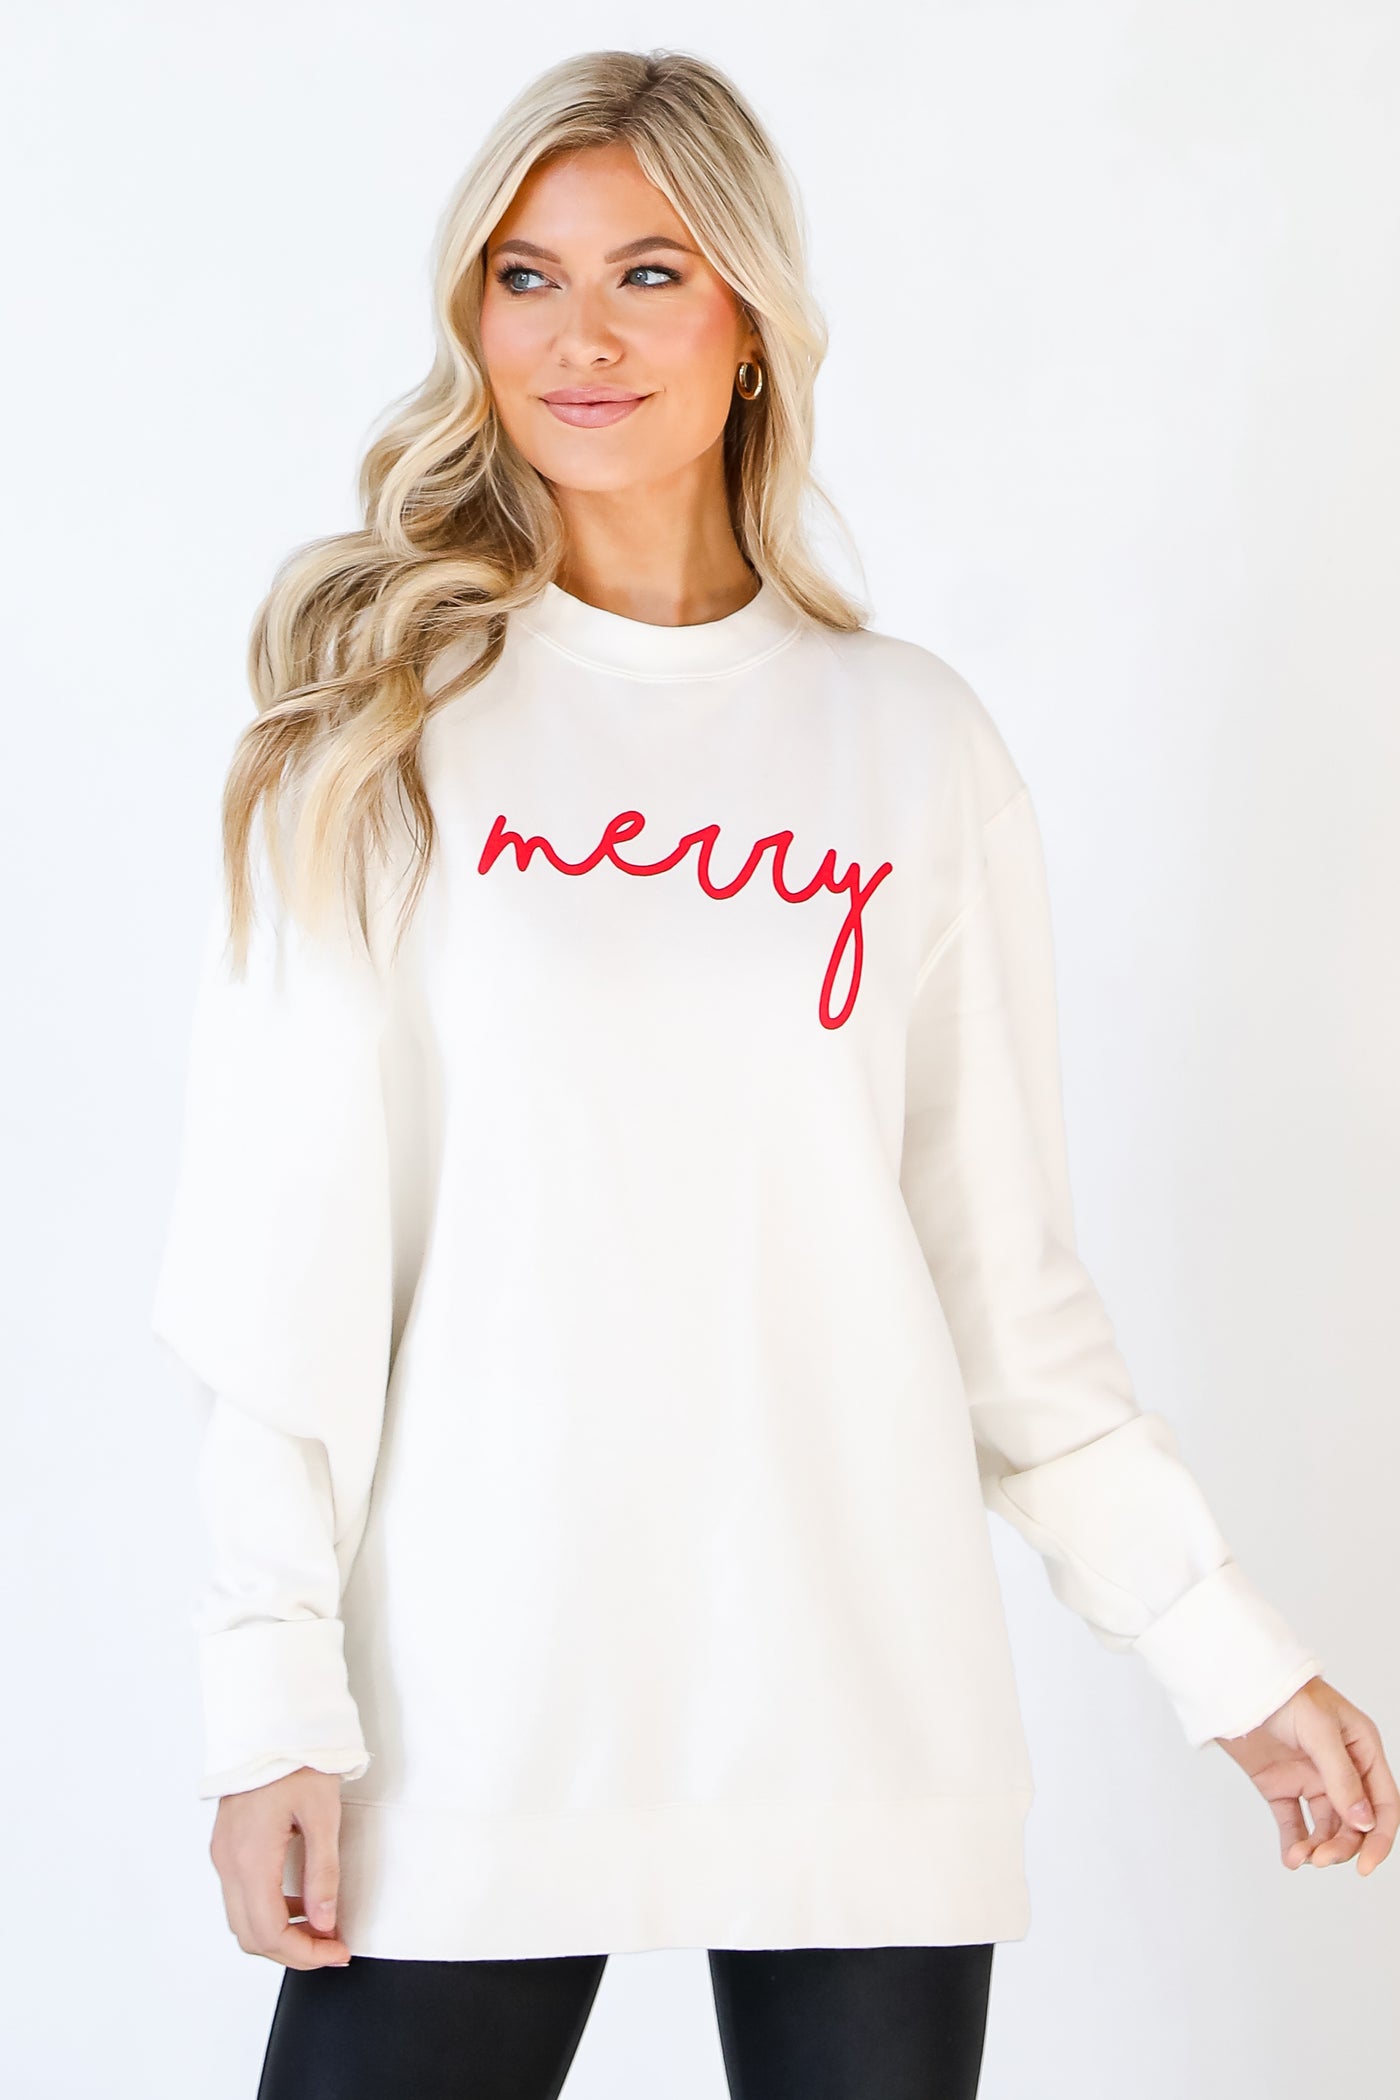 Red Merry Script Pullover. Christmas Graphic Sweatshirt. Oversized Comfy Christmas Sweatshirt